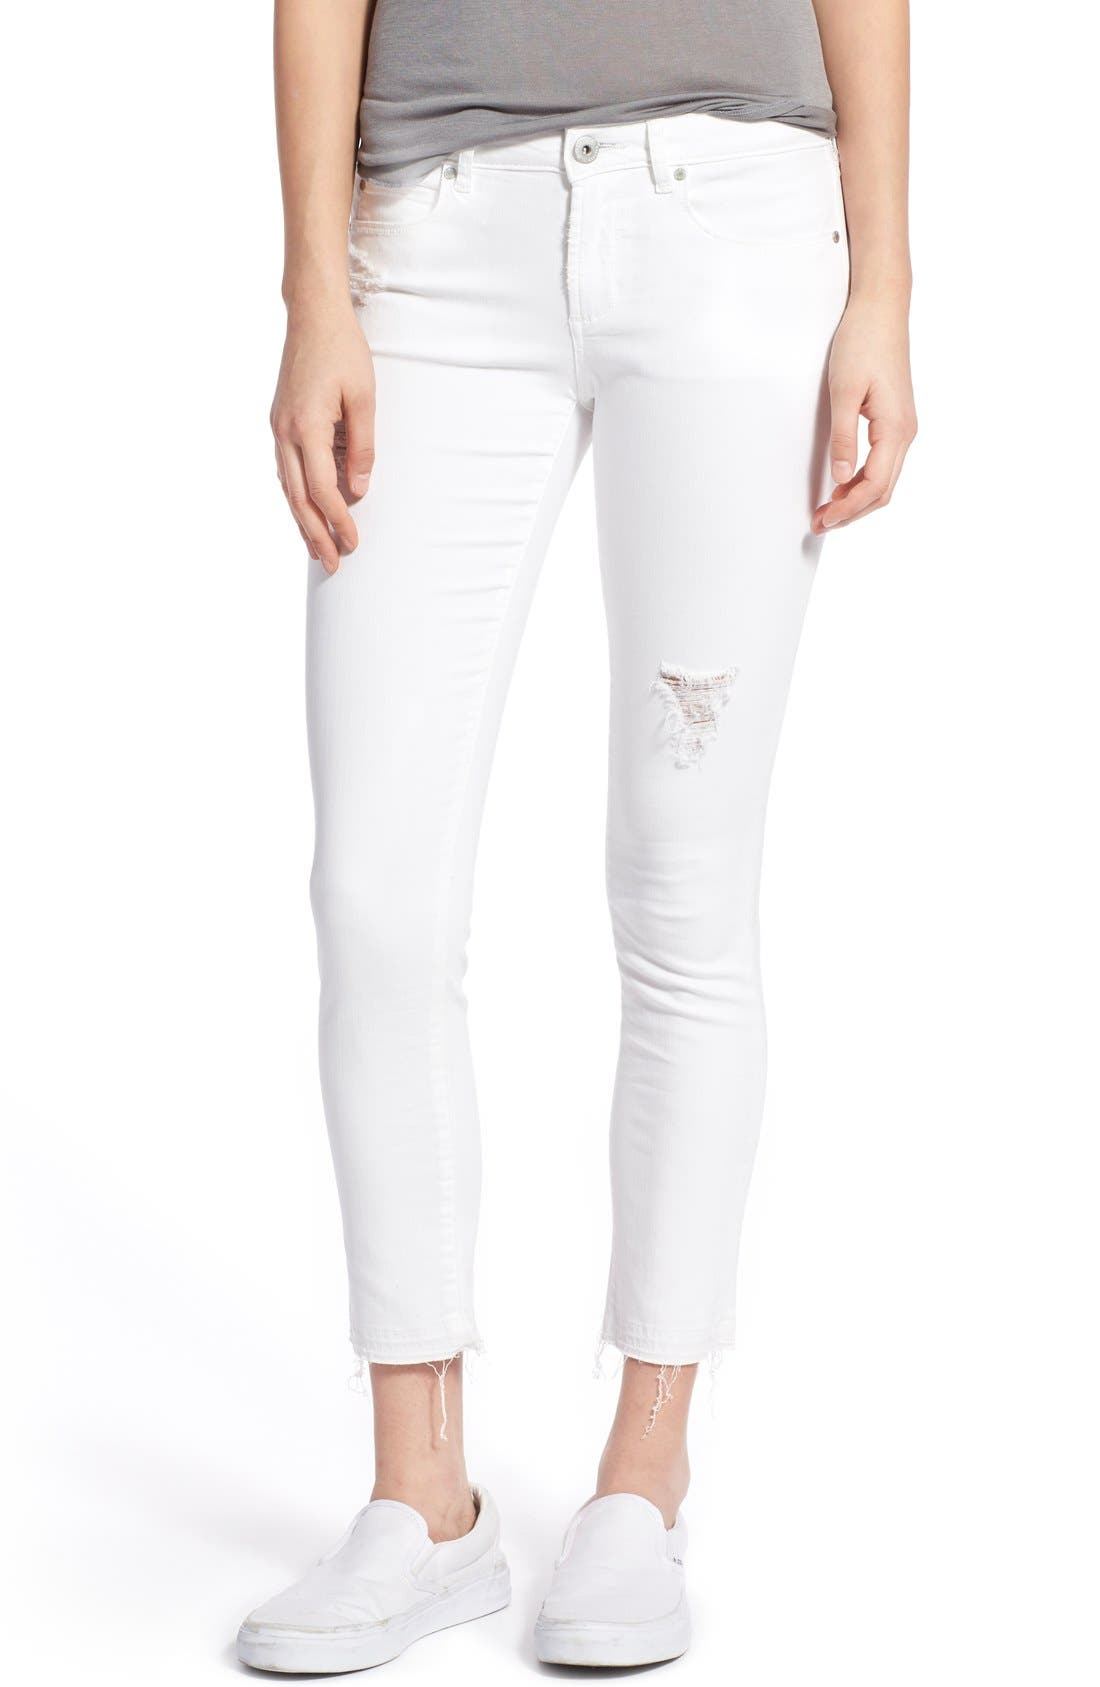 white pants with frayed hem